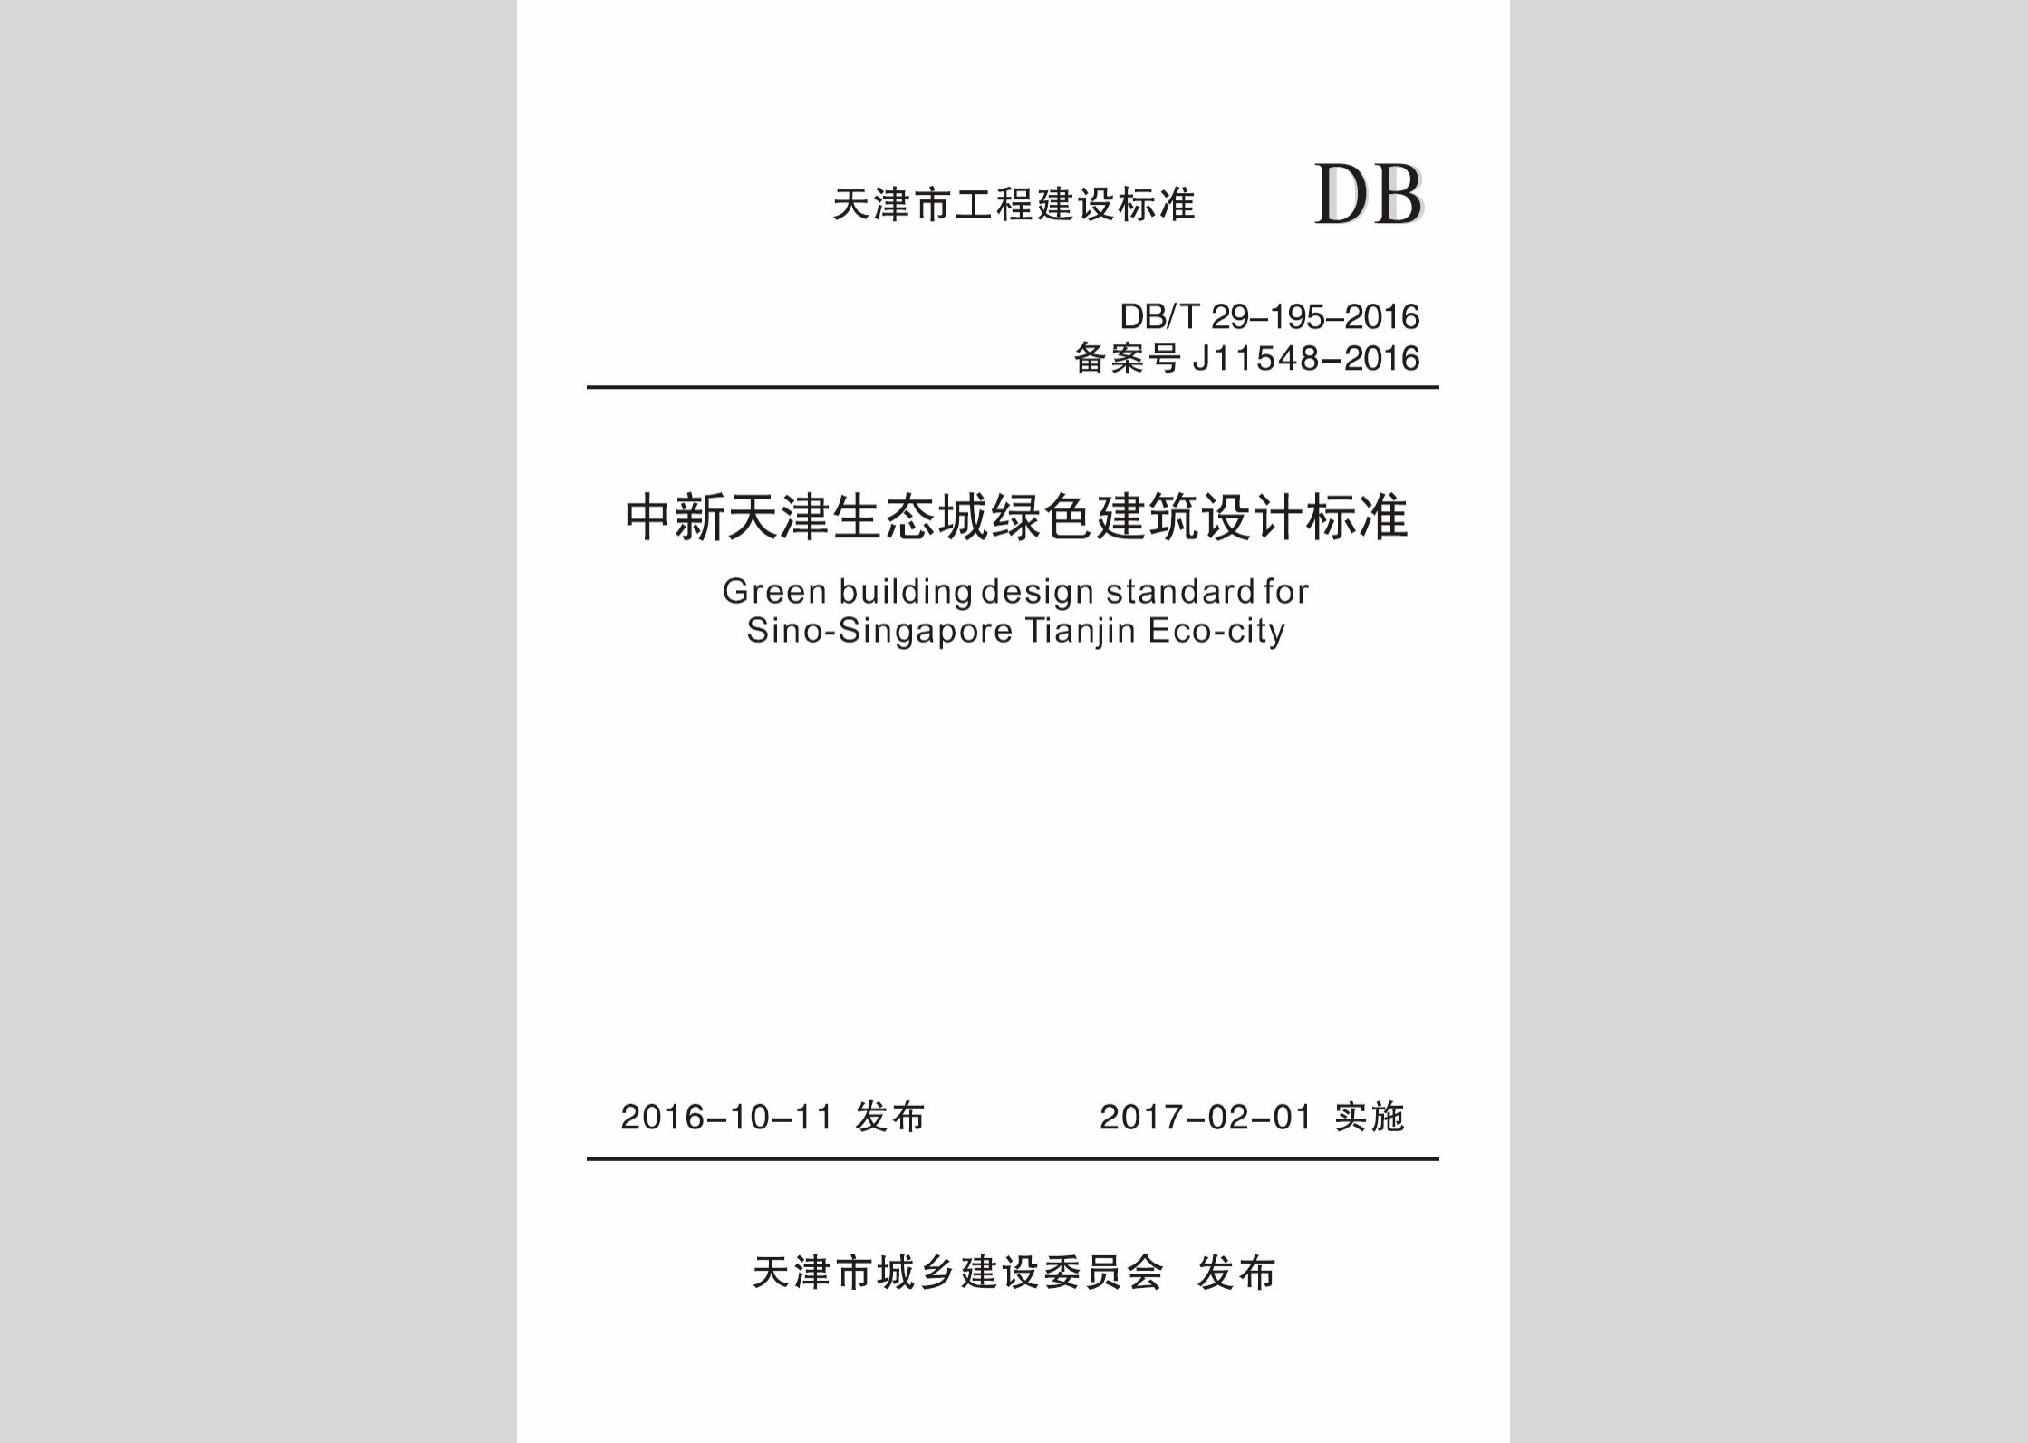 DB/T29-195-2016：中新天津生态城绿色建筑设计标准